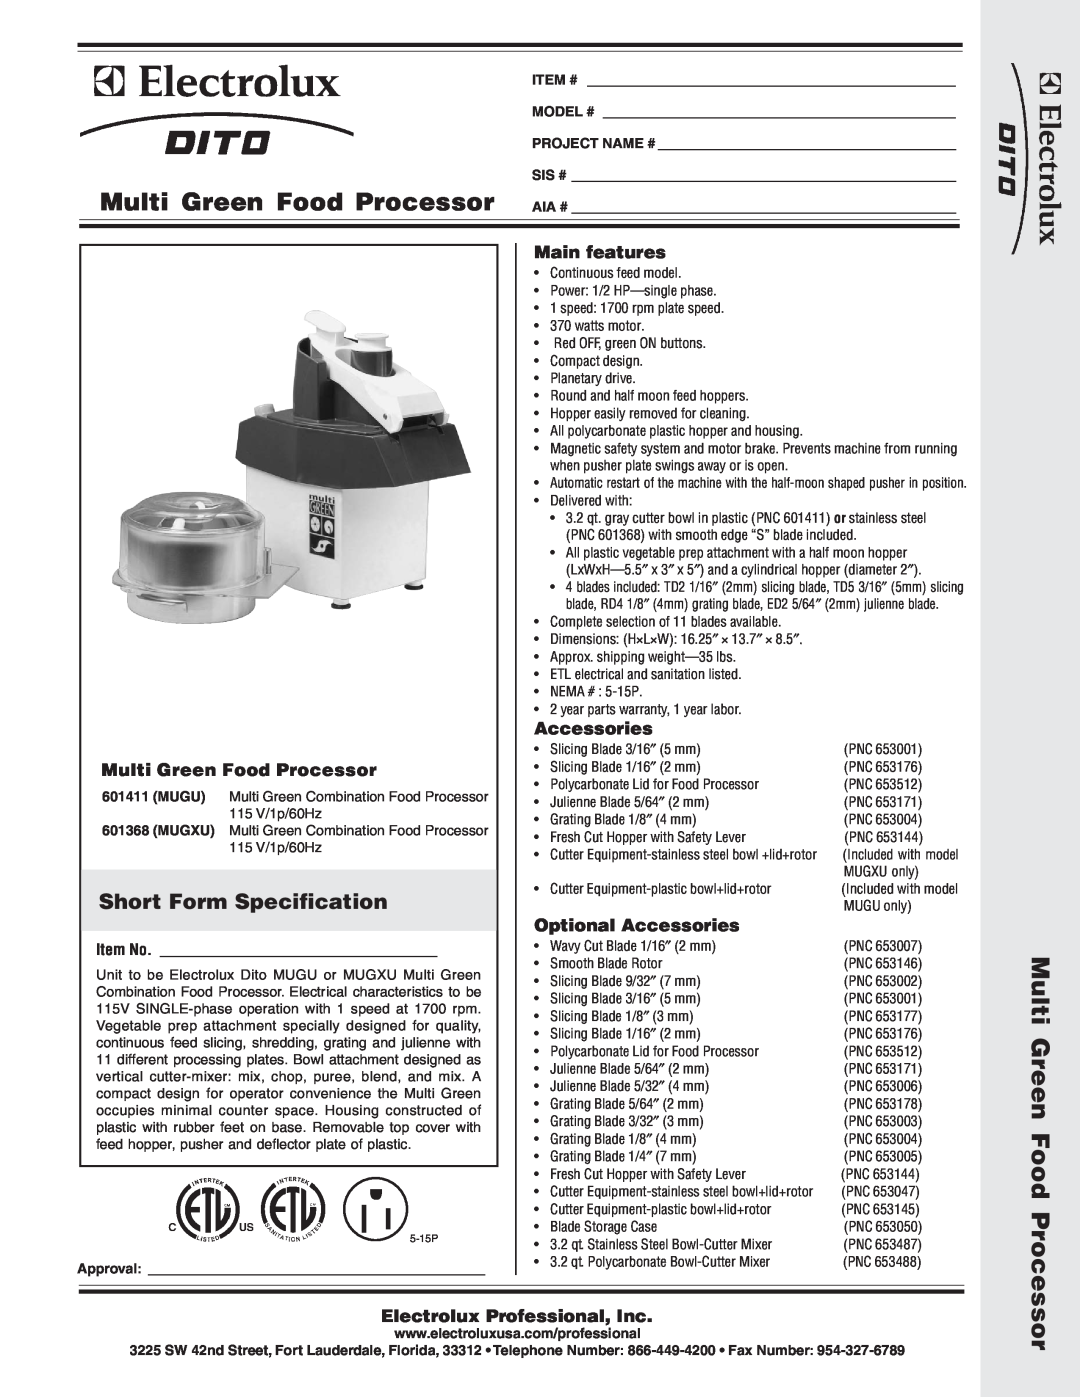 Electrolux MUGU dimensions Multi Green Food Processor, Main features, Optional Accessories, Item No, Item #, Model # 